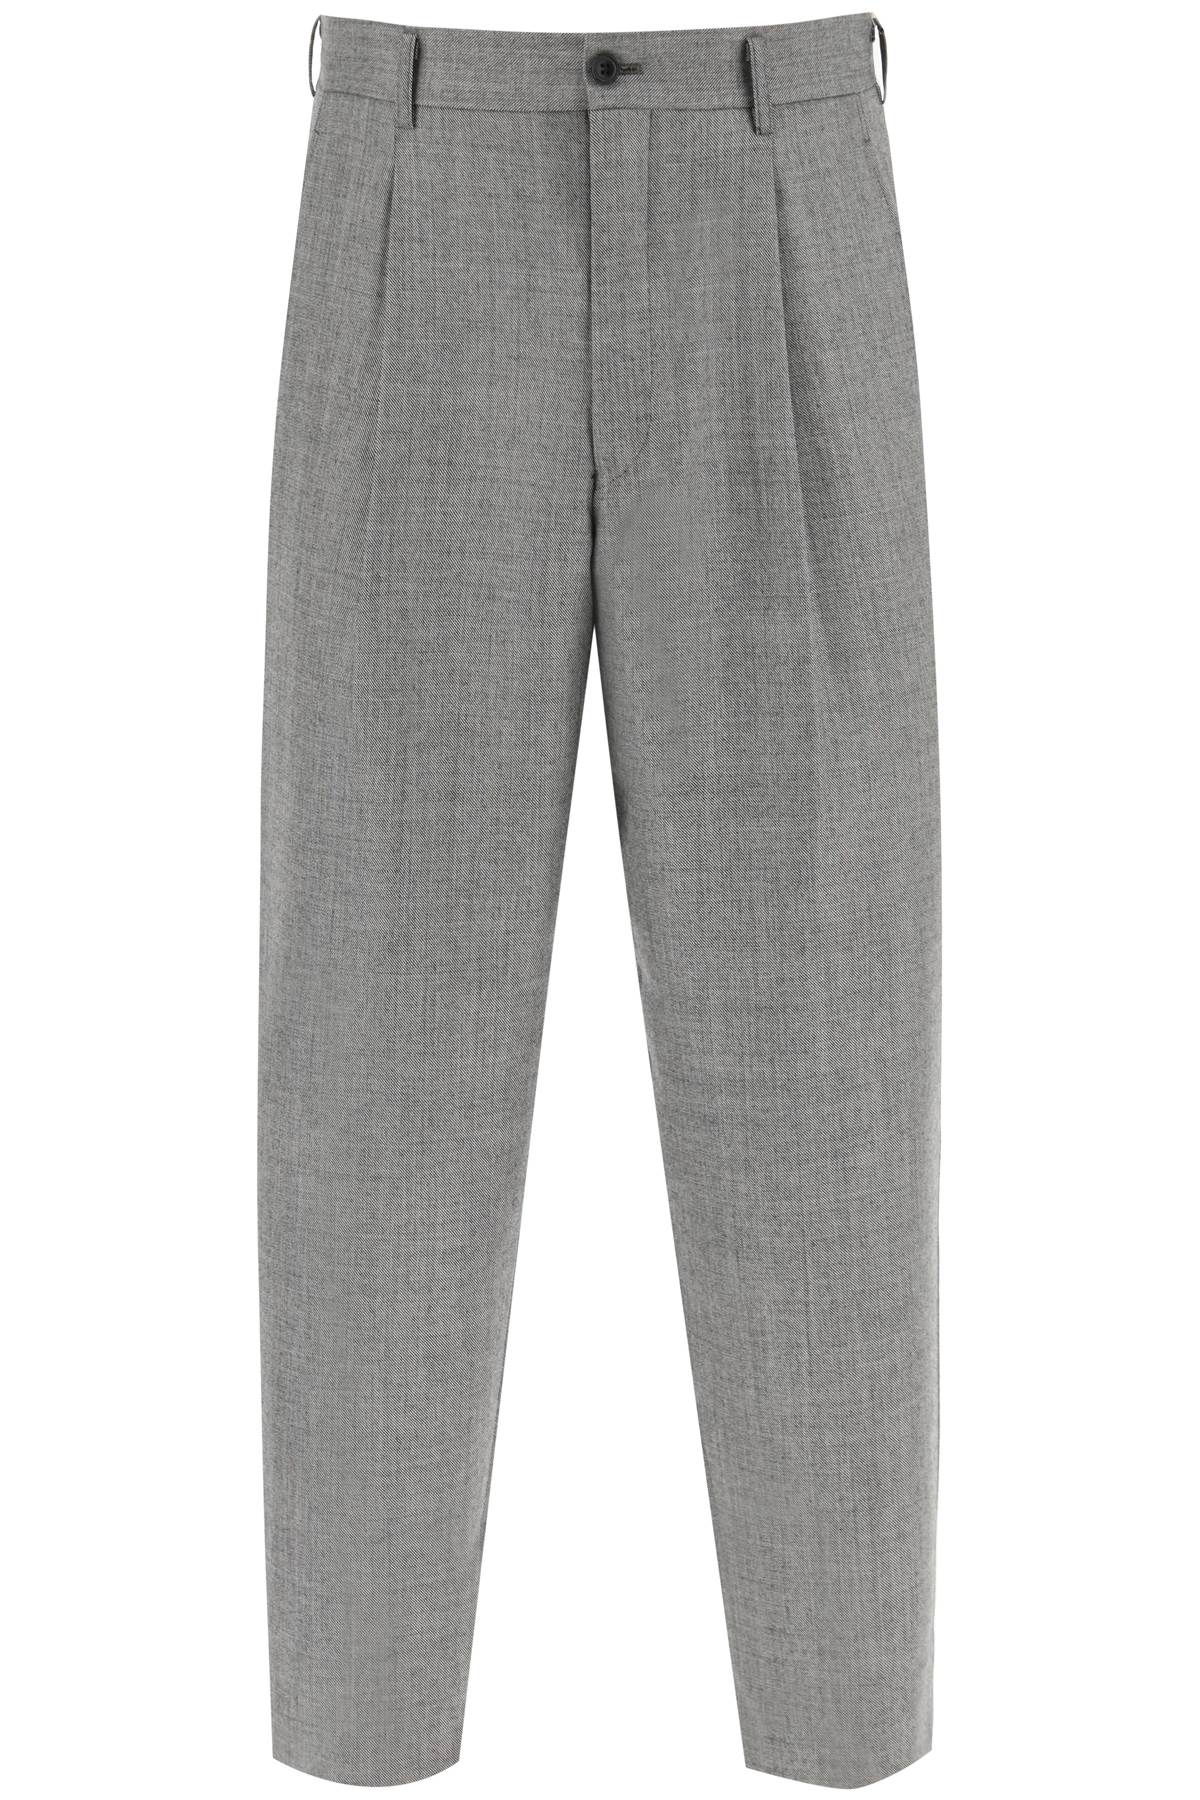 Men's Grey Cropped Wool Pants with Sharkskin Motif by COMME DES GARÇONS HOMME PLUS